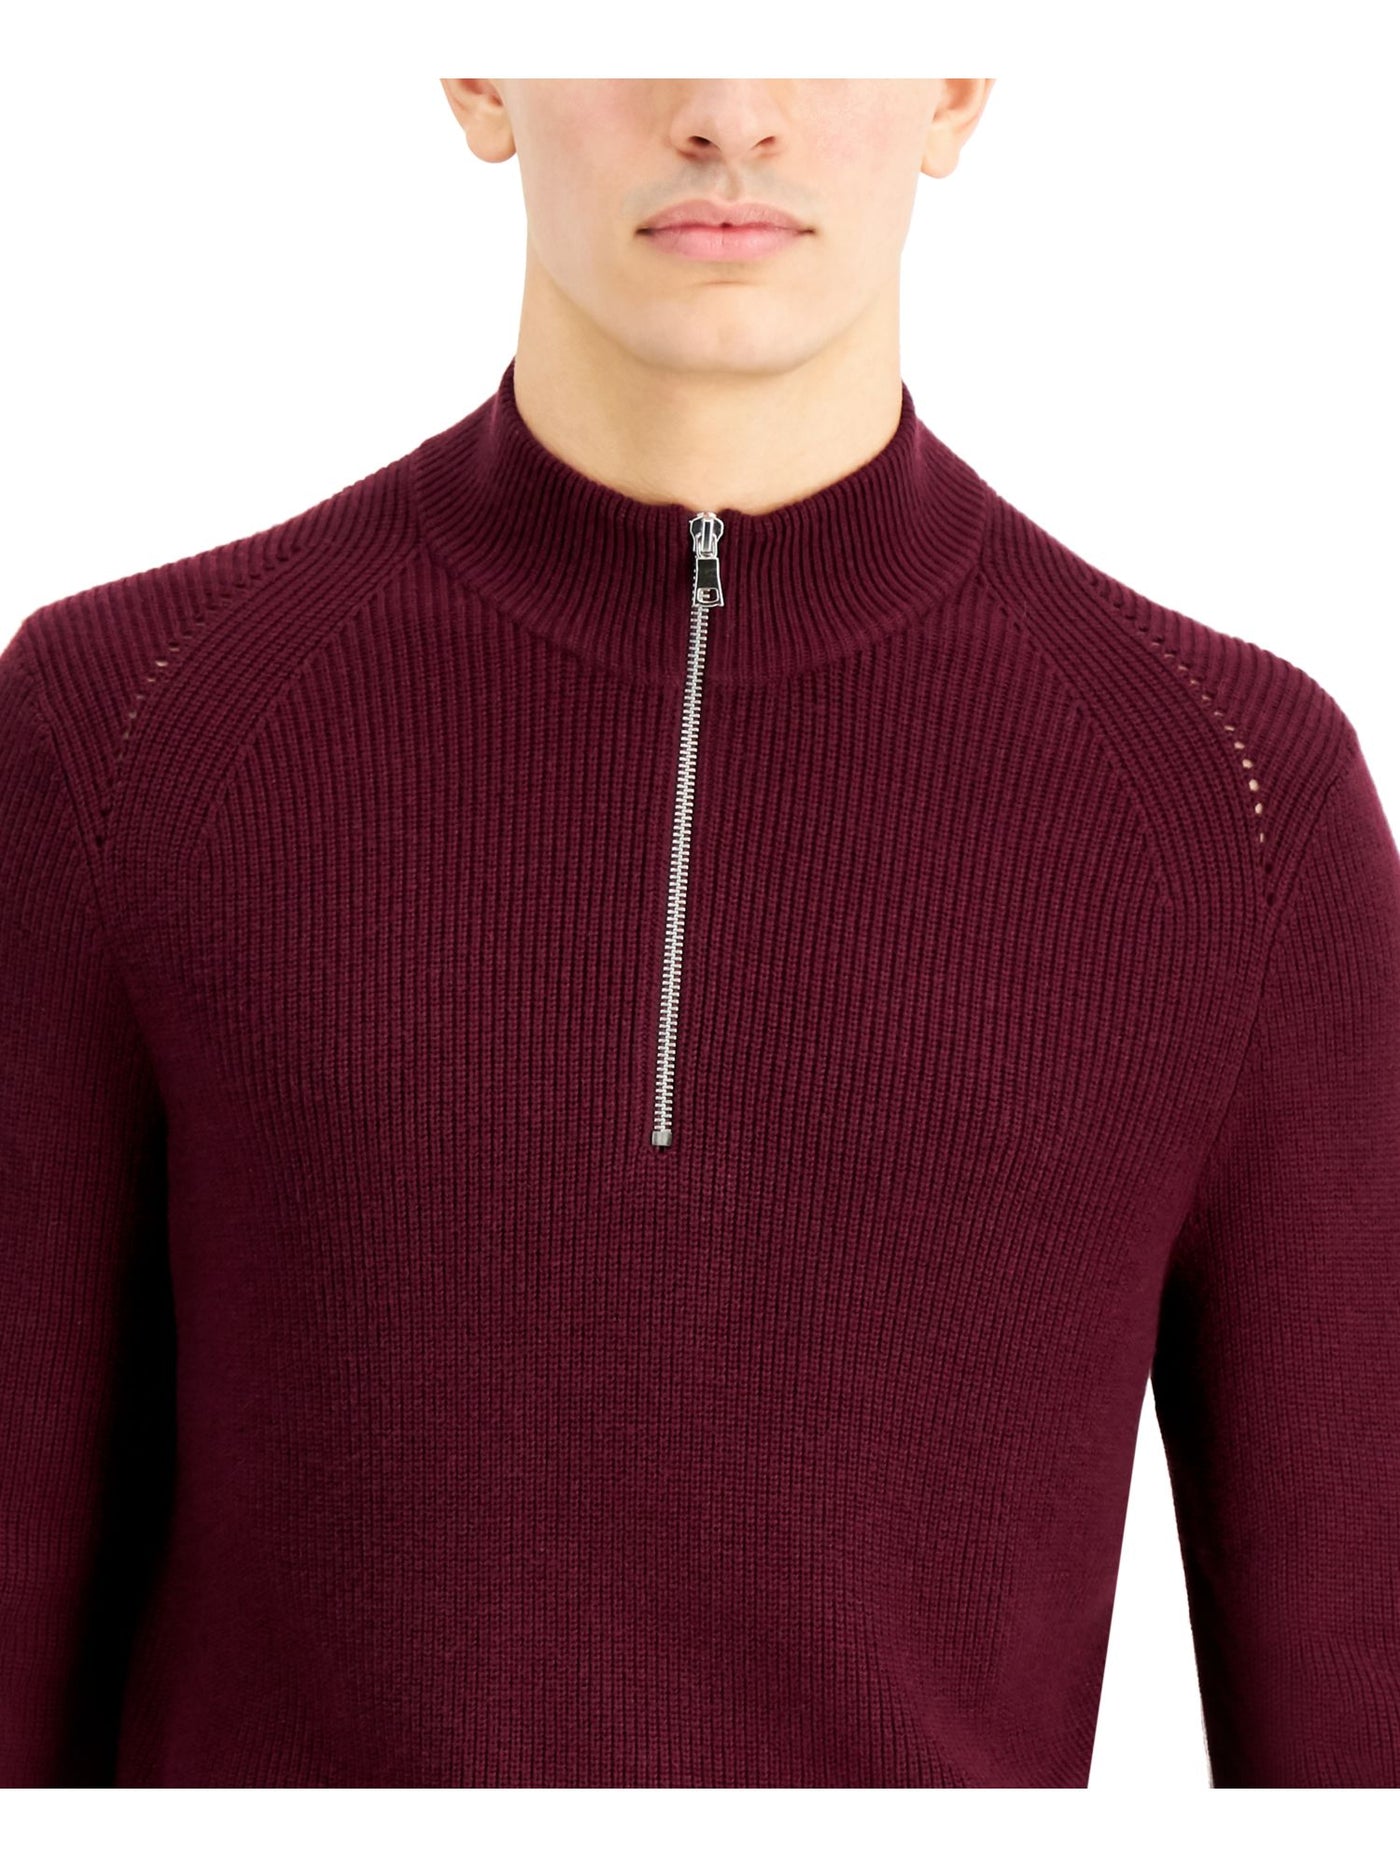 INC Mens Burgundy Turtle Neck Quarter-Zip Pullover Sweater S